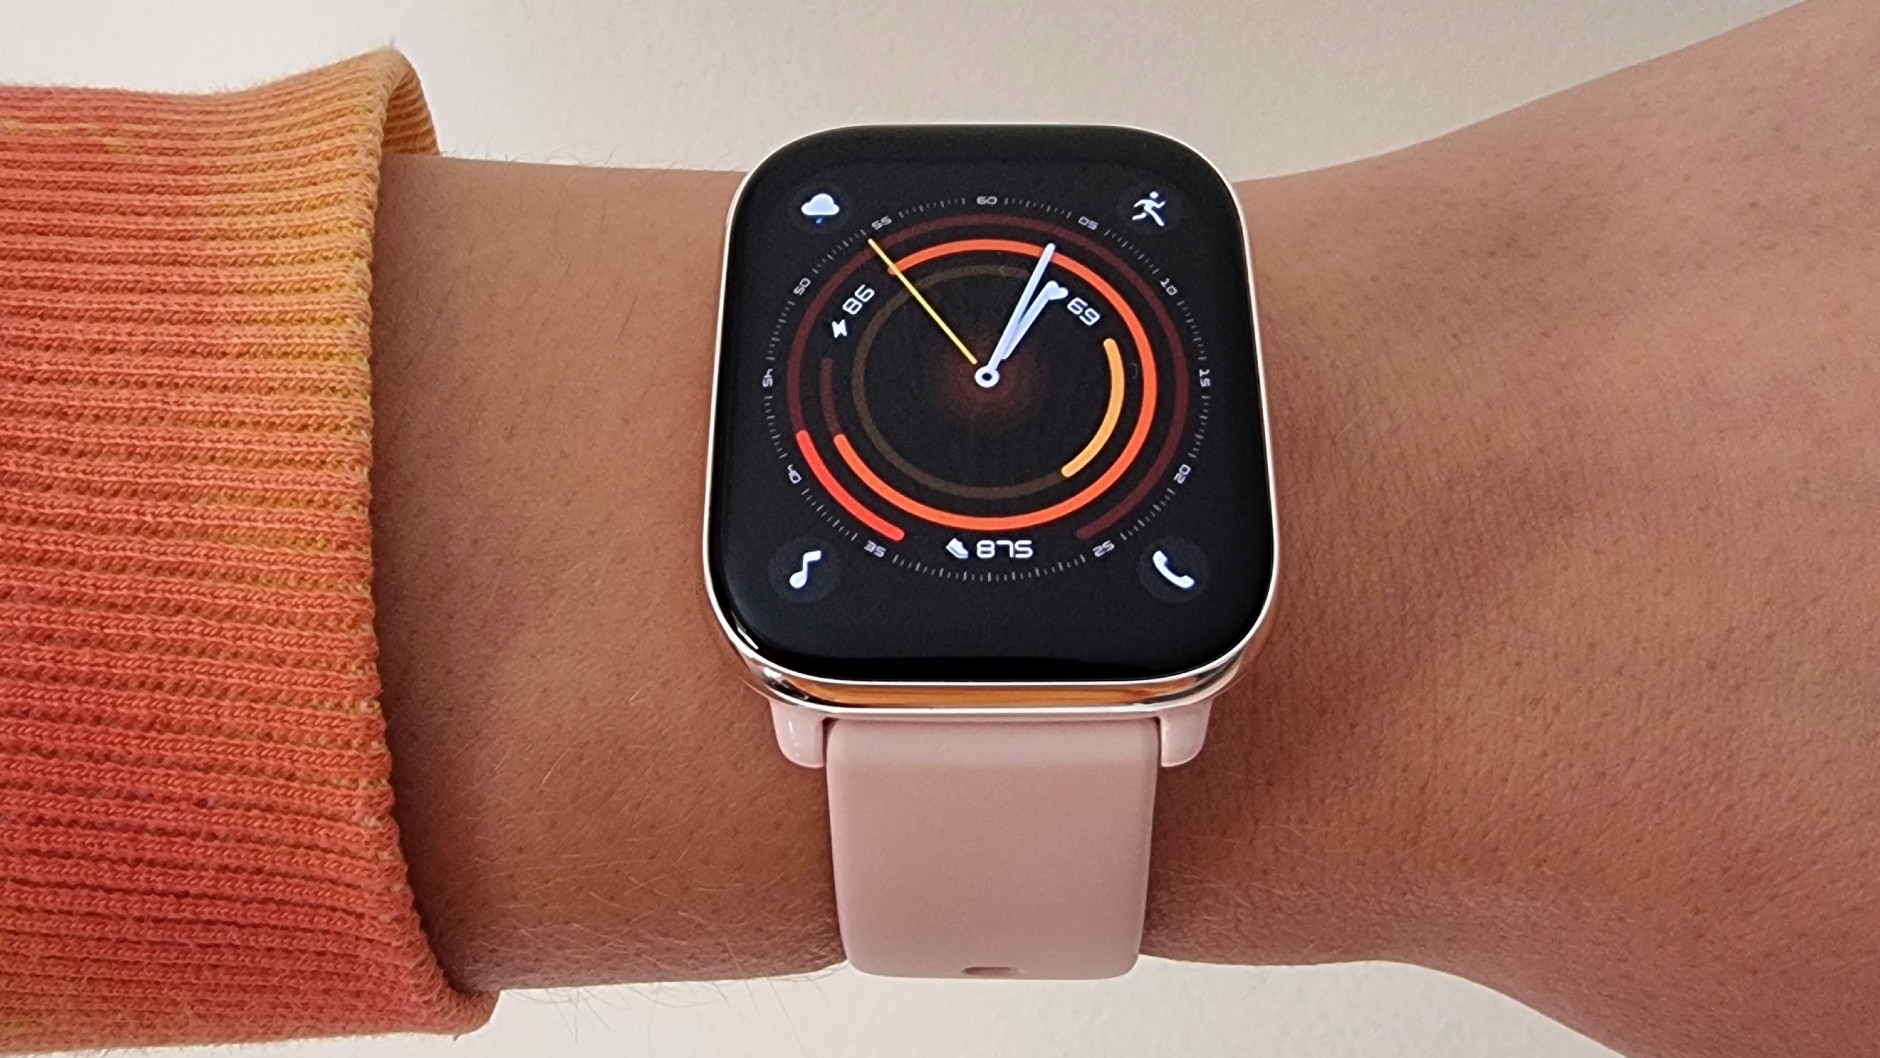 The Amazfit Active smartwatch worn on the wrist